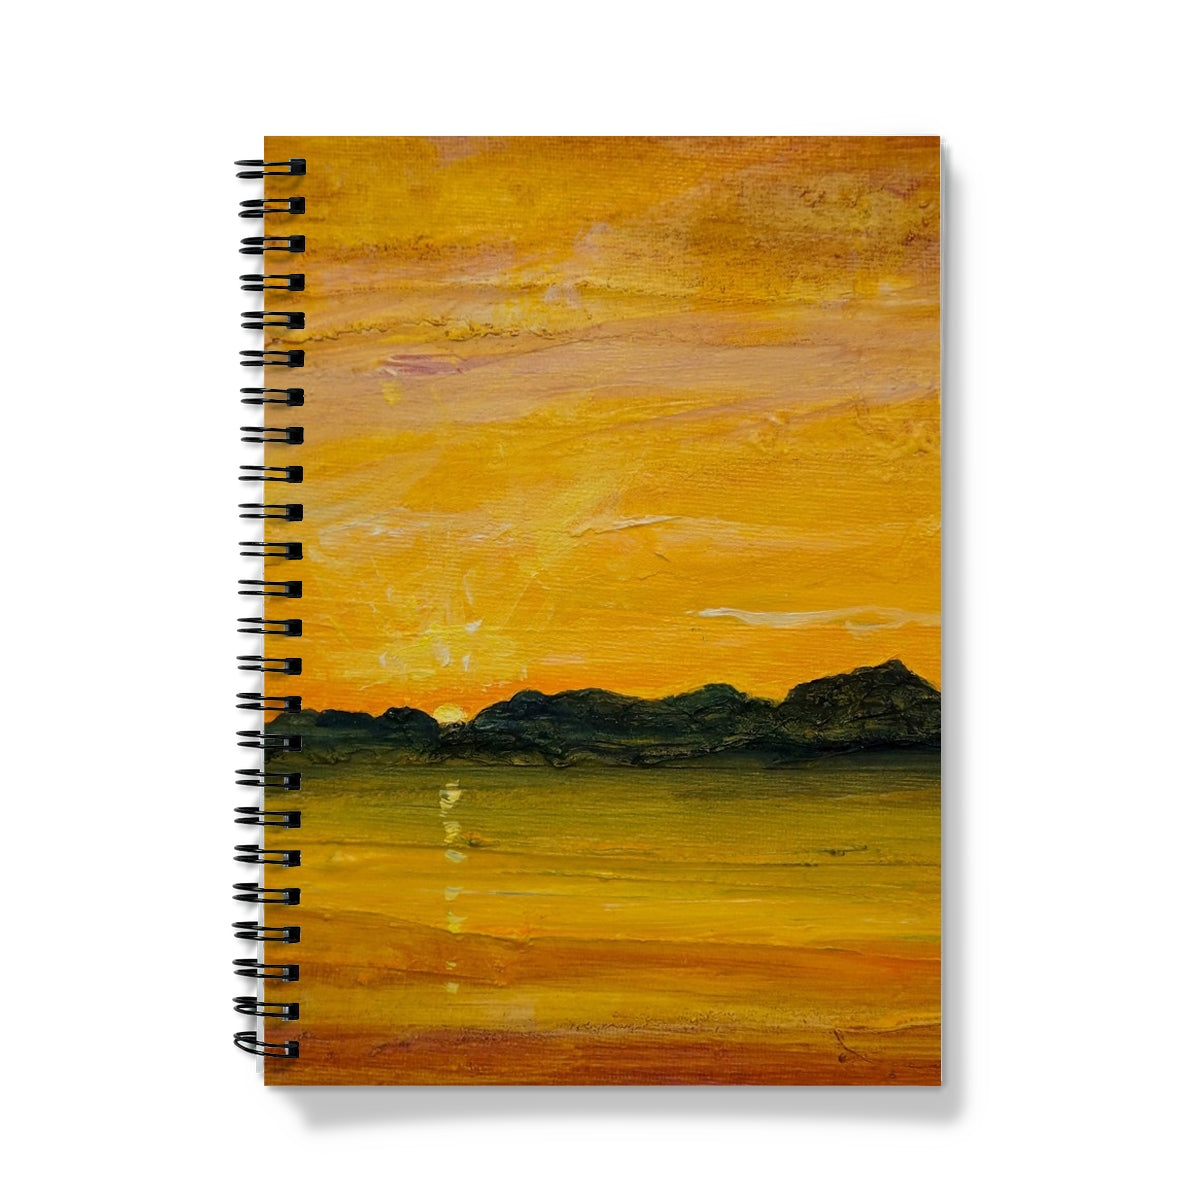 Jura Sunset Art Gifts Notebook-Journals & Notebooks-Hebridean Islands Art Gallery-A5-Graph-Paintings, Prints, Homeware, Art Gifts From Scotland By Scottish Artist Kevin Hunter